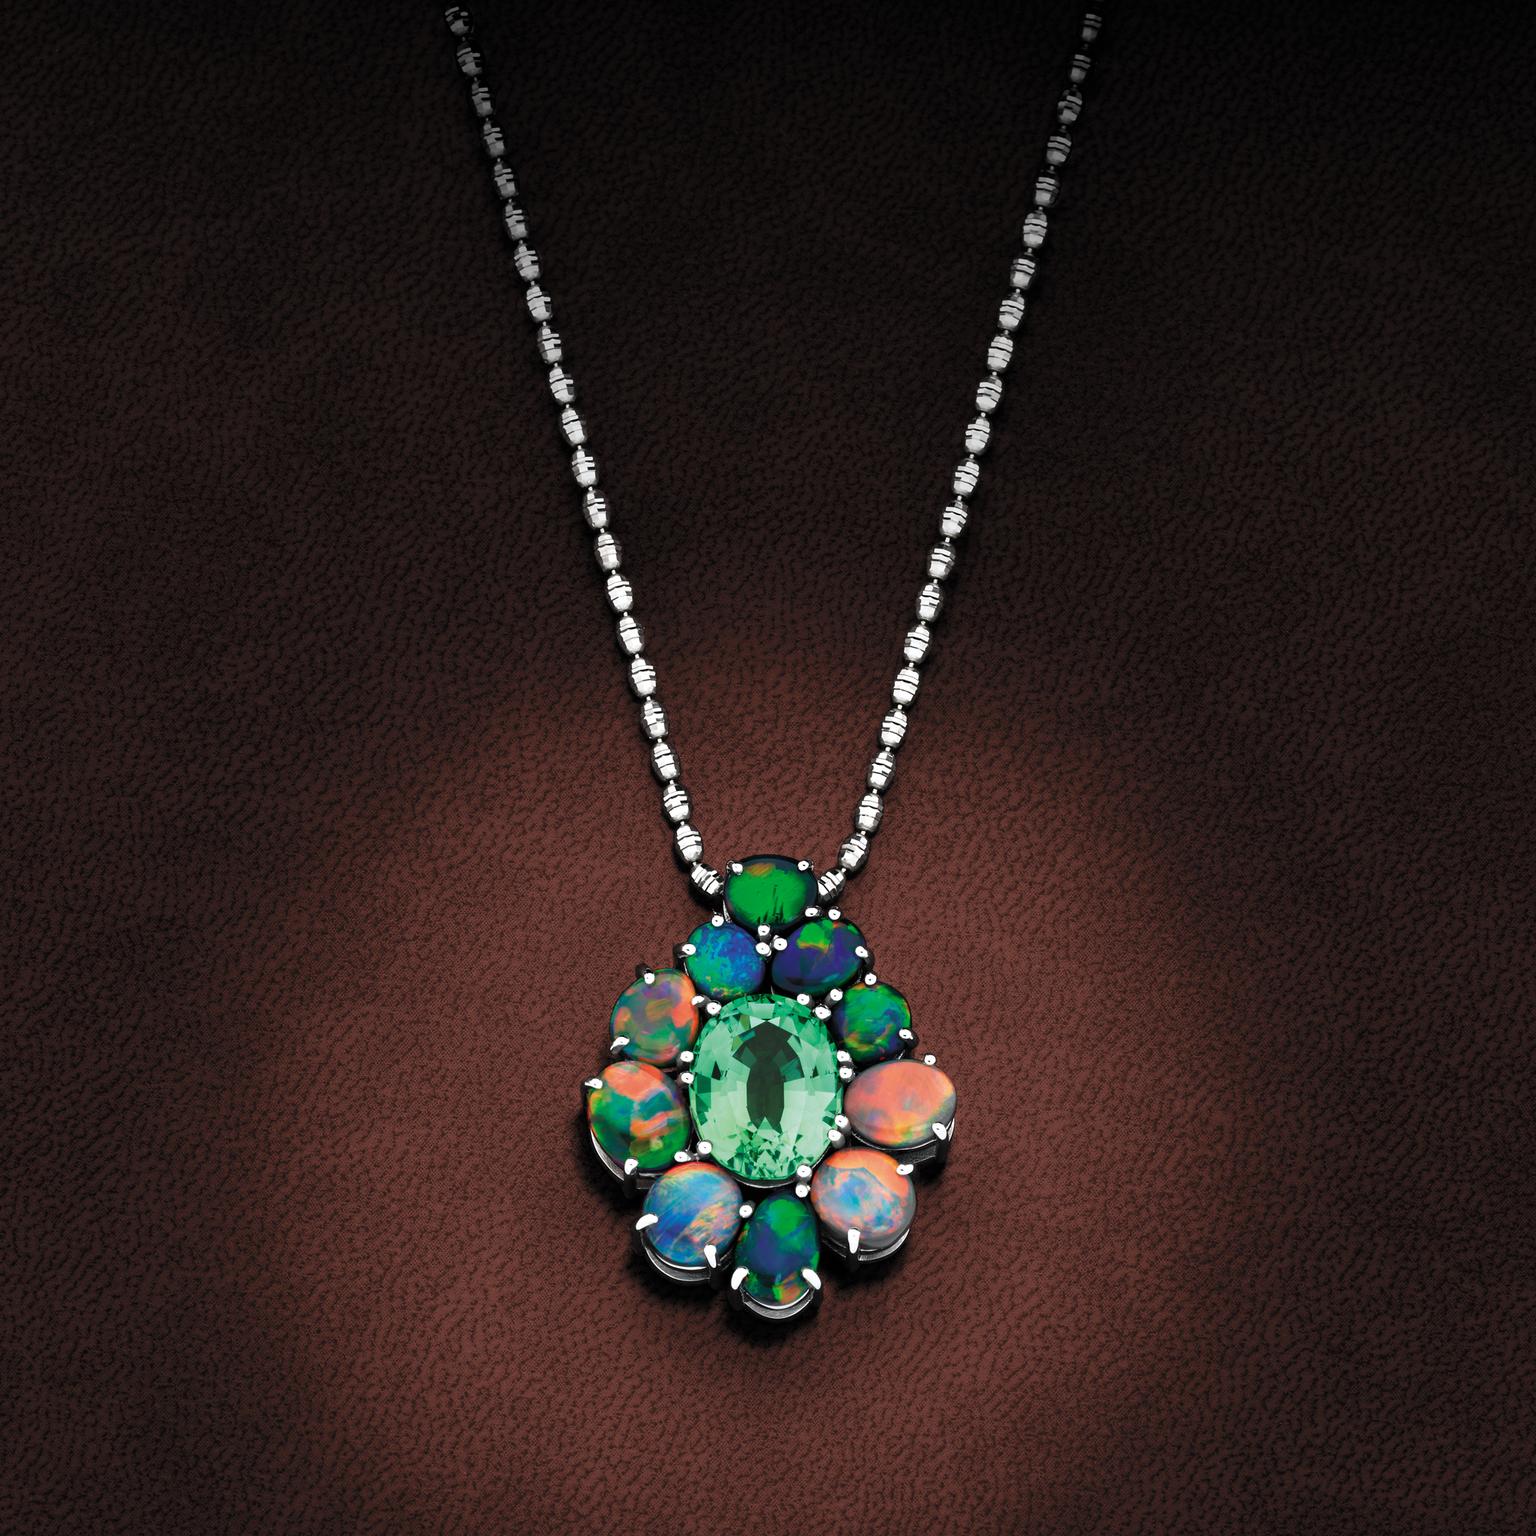 Giulians tourmaline and black opal pendant